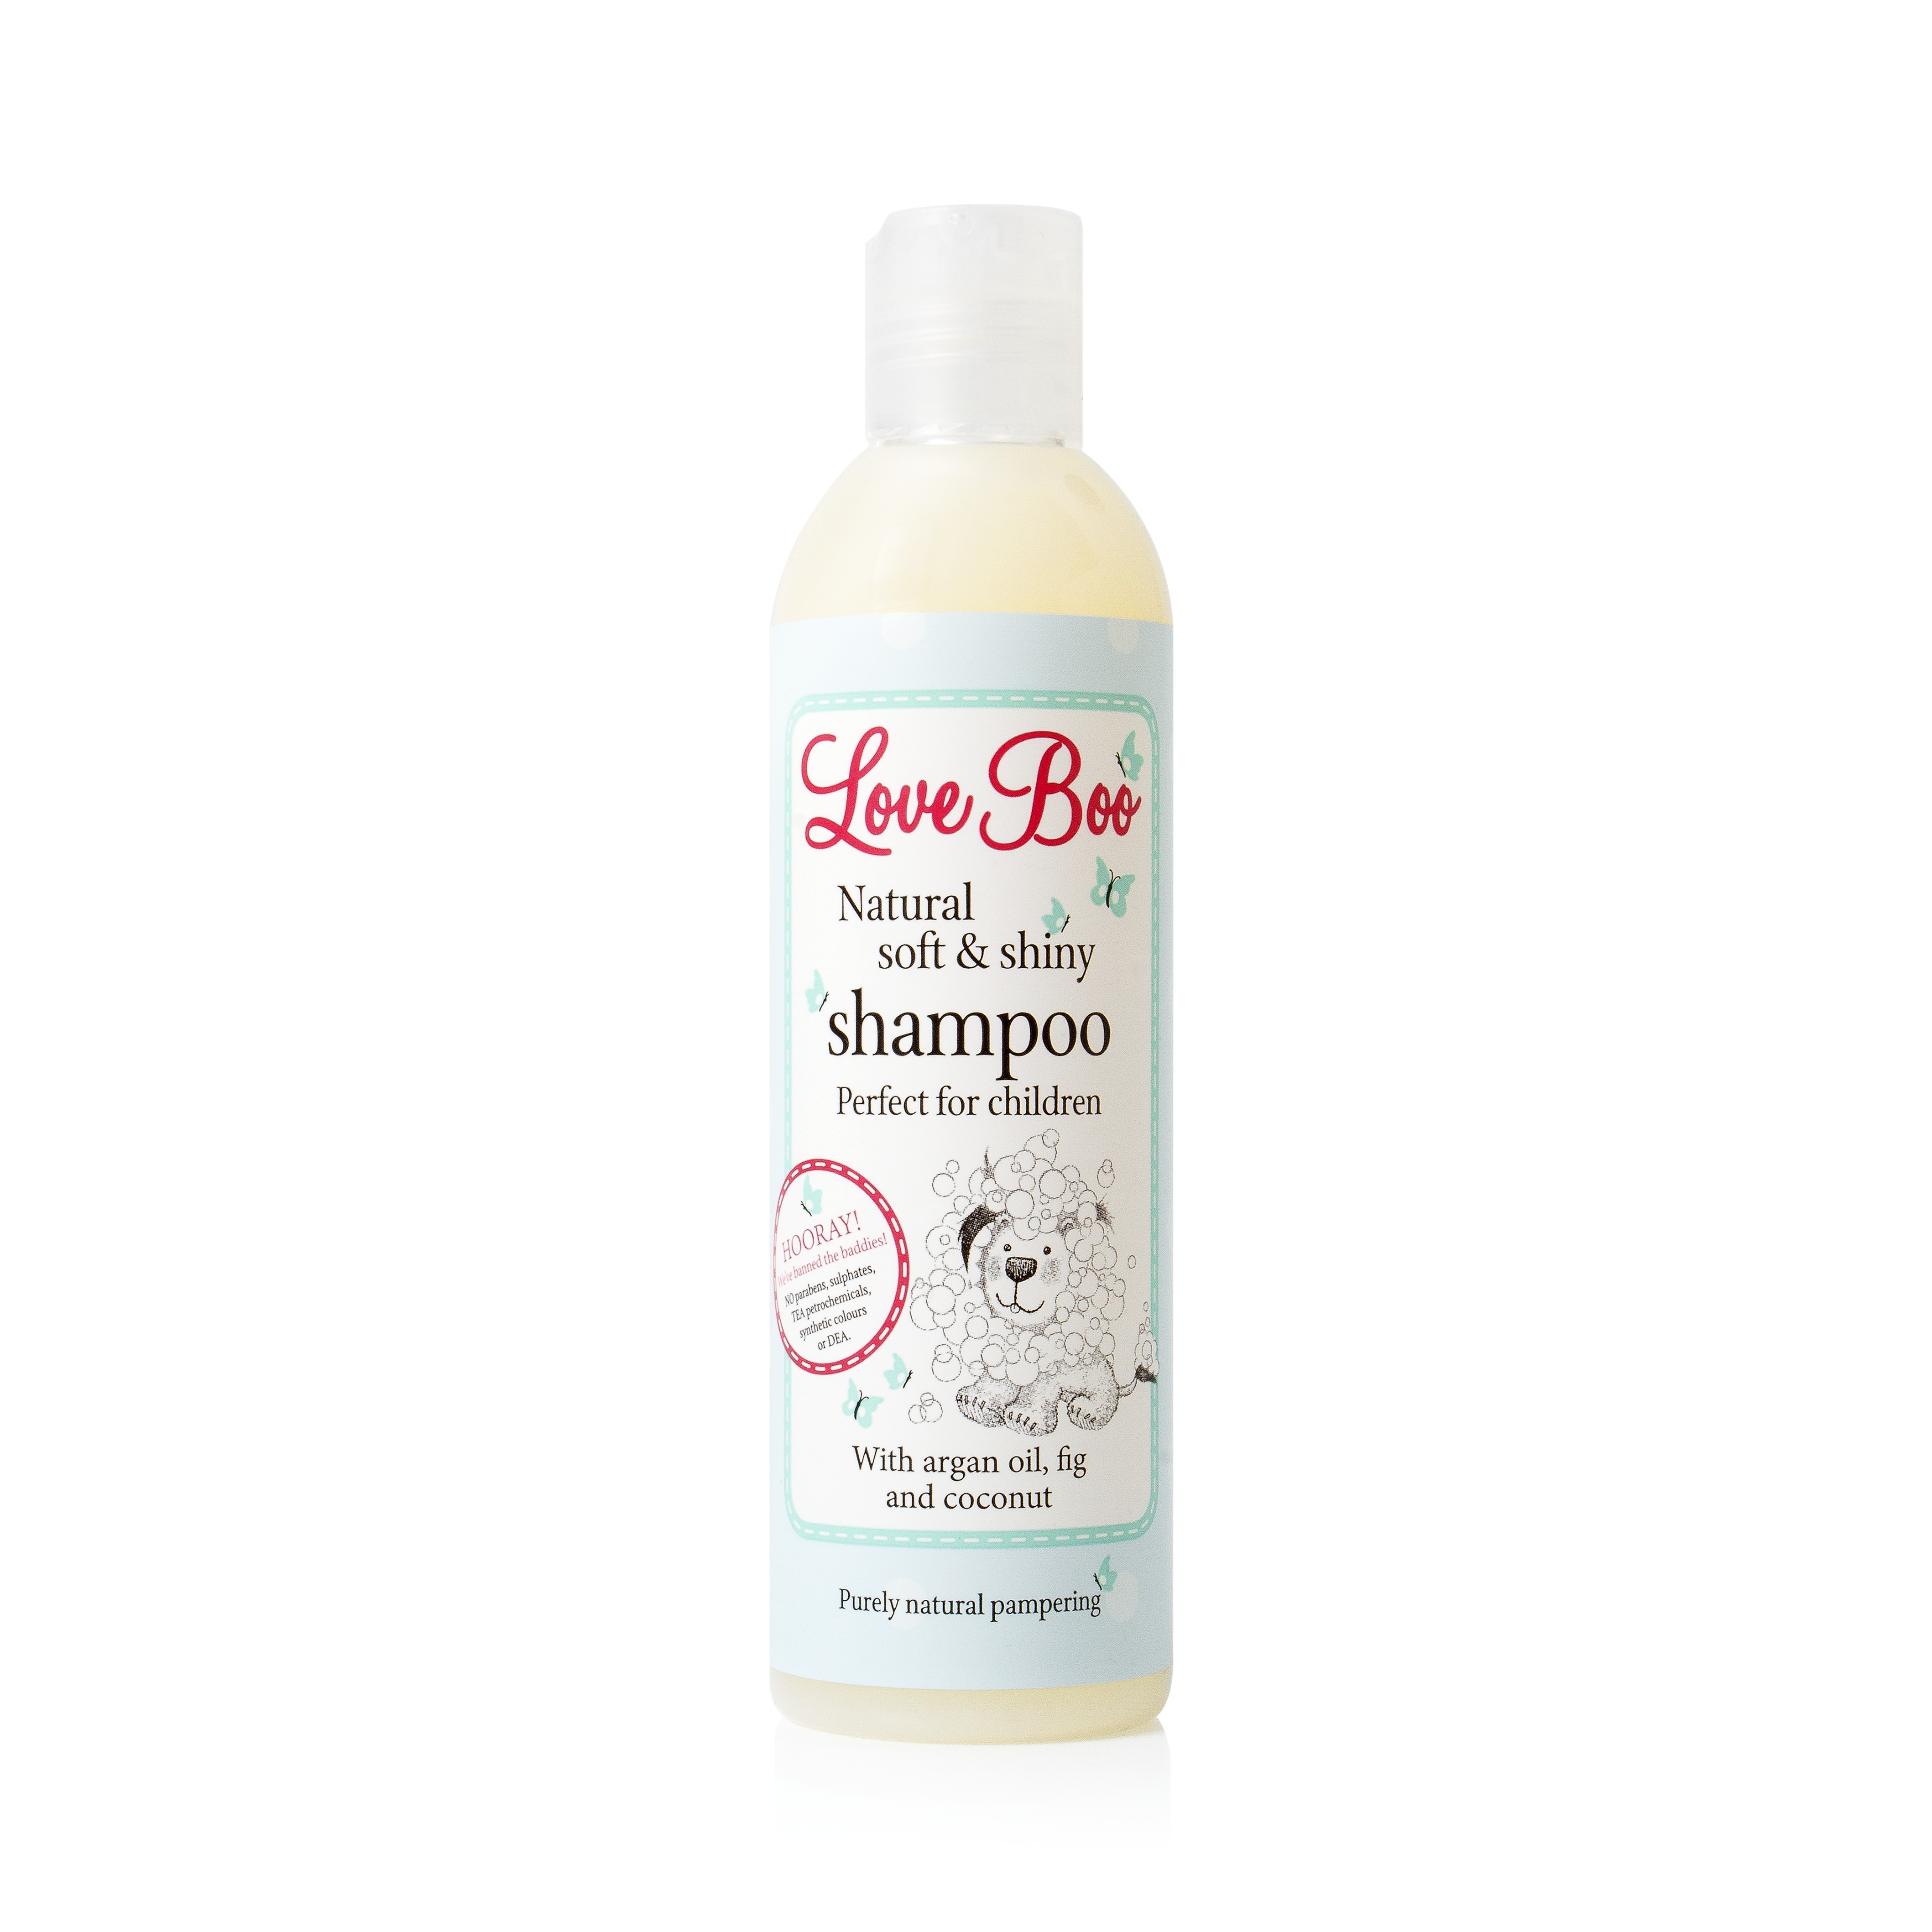 Love Boo Soft & Shiny Shampoo, 250 ml